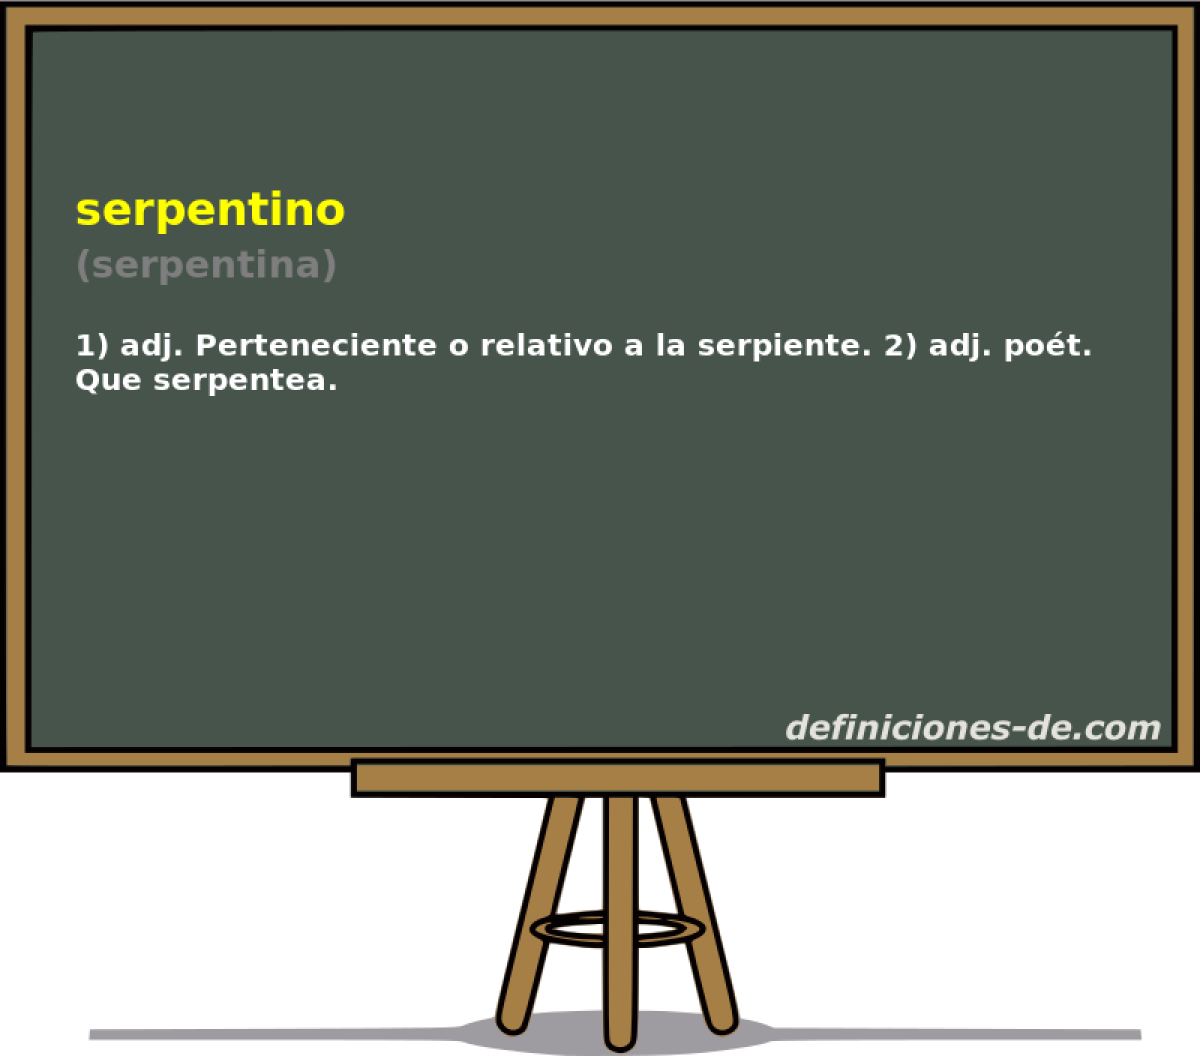 serpentino (serpentina)